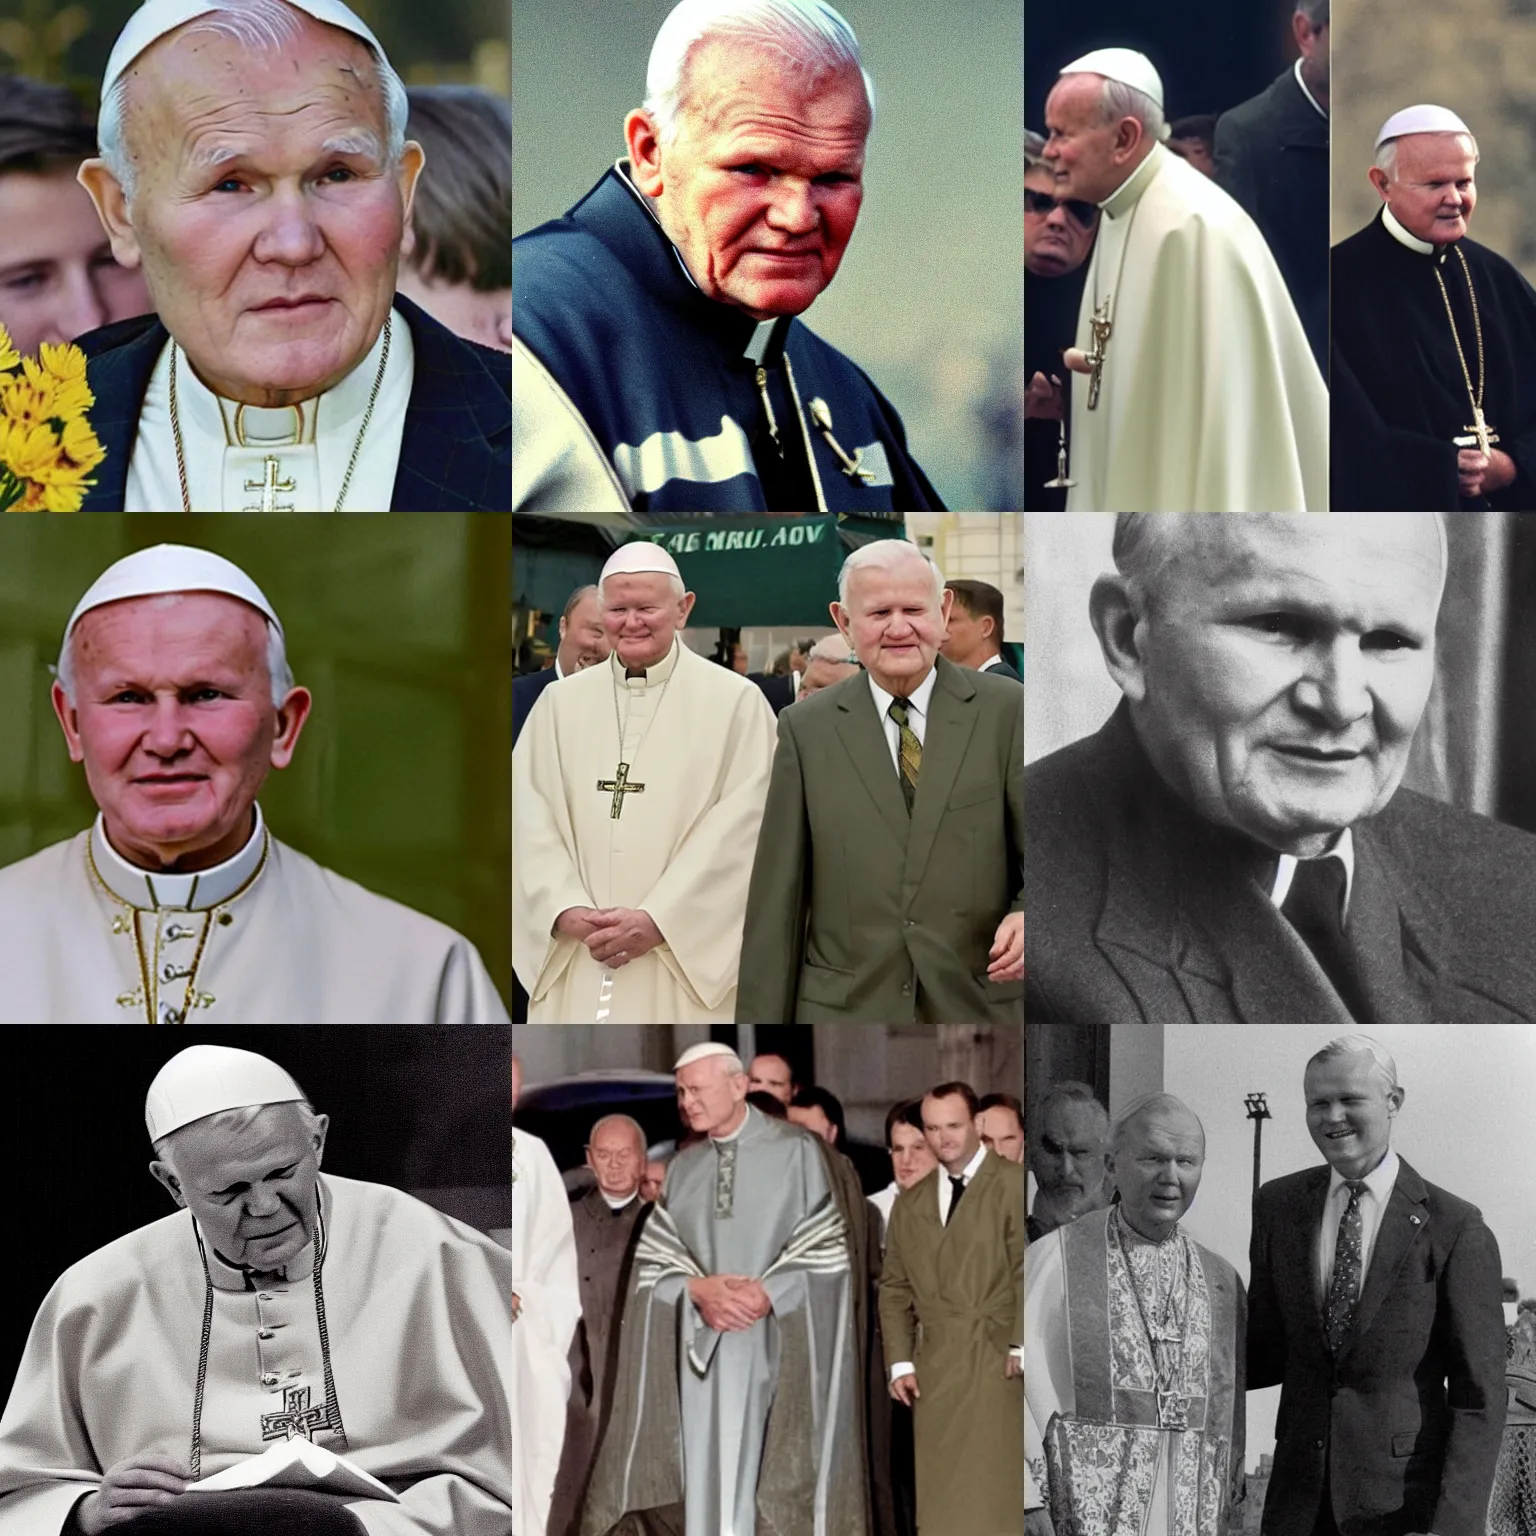 Prompt: Gigachad John Paul II